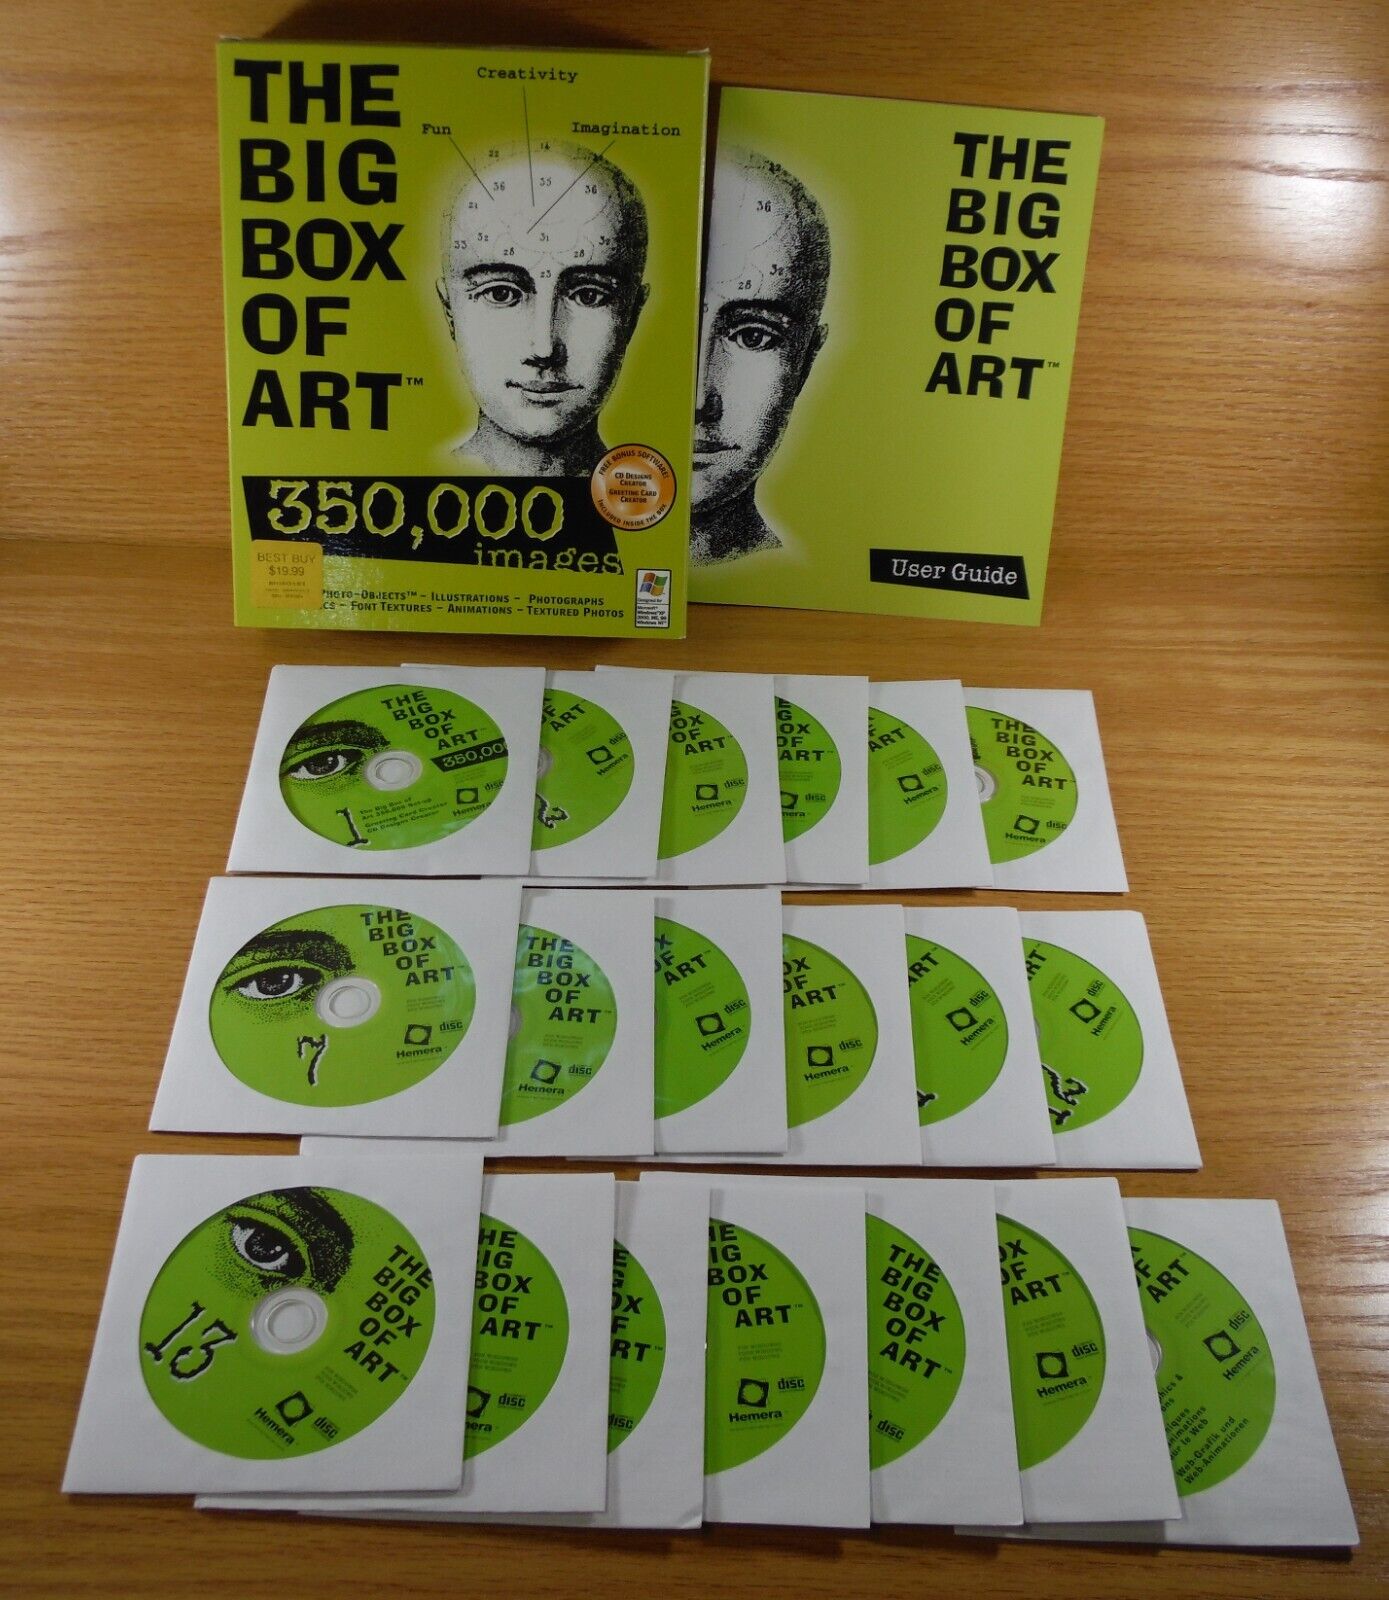 The Big Box of Art Images, Graphics, Clip Art, Photos, 19 CD-ROMs 350,000 Images